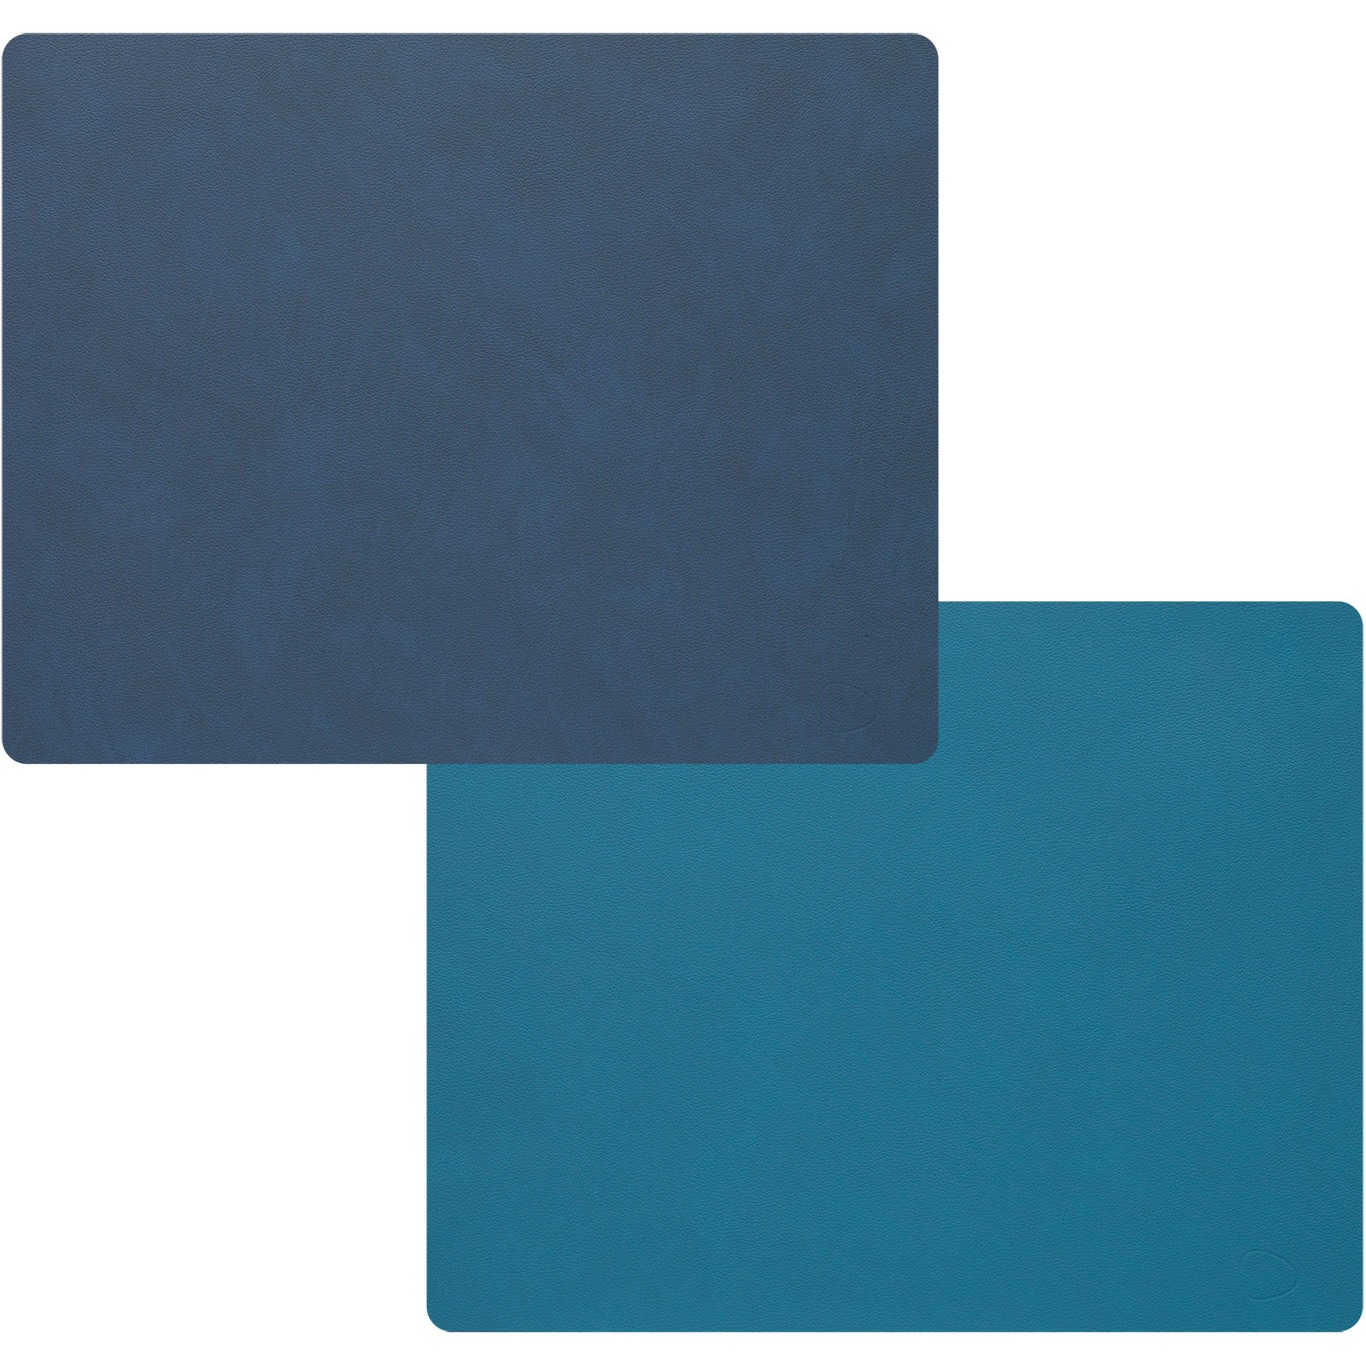 Square L Table Mat Double, 35x45 cm, Petrol/Midnight Blue